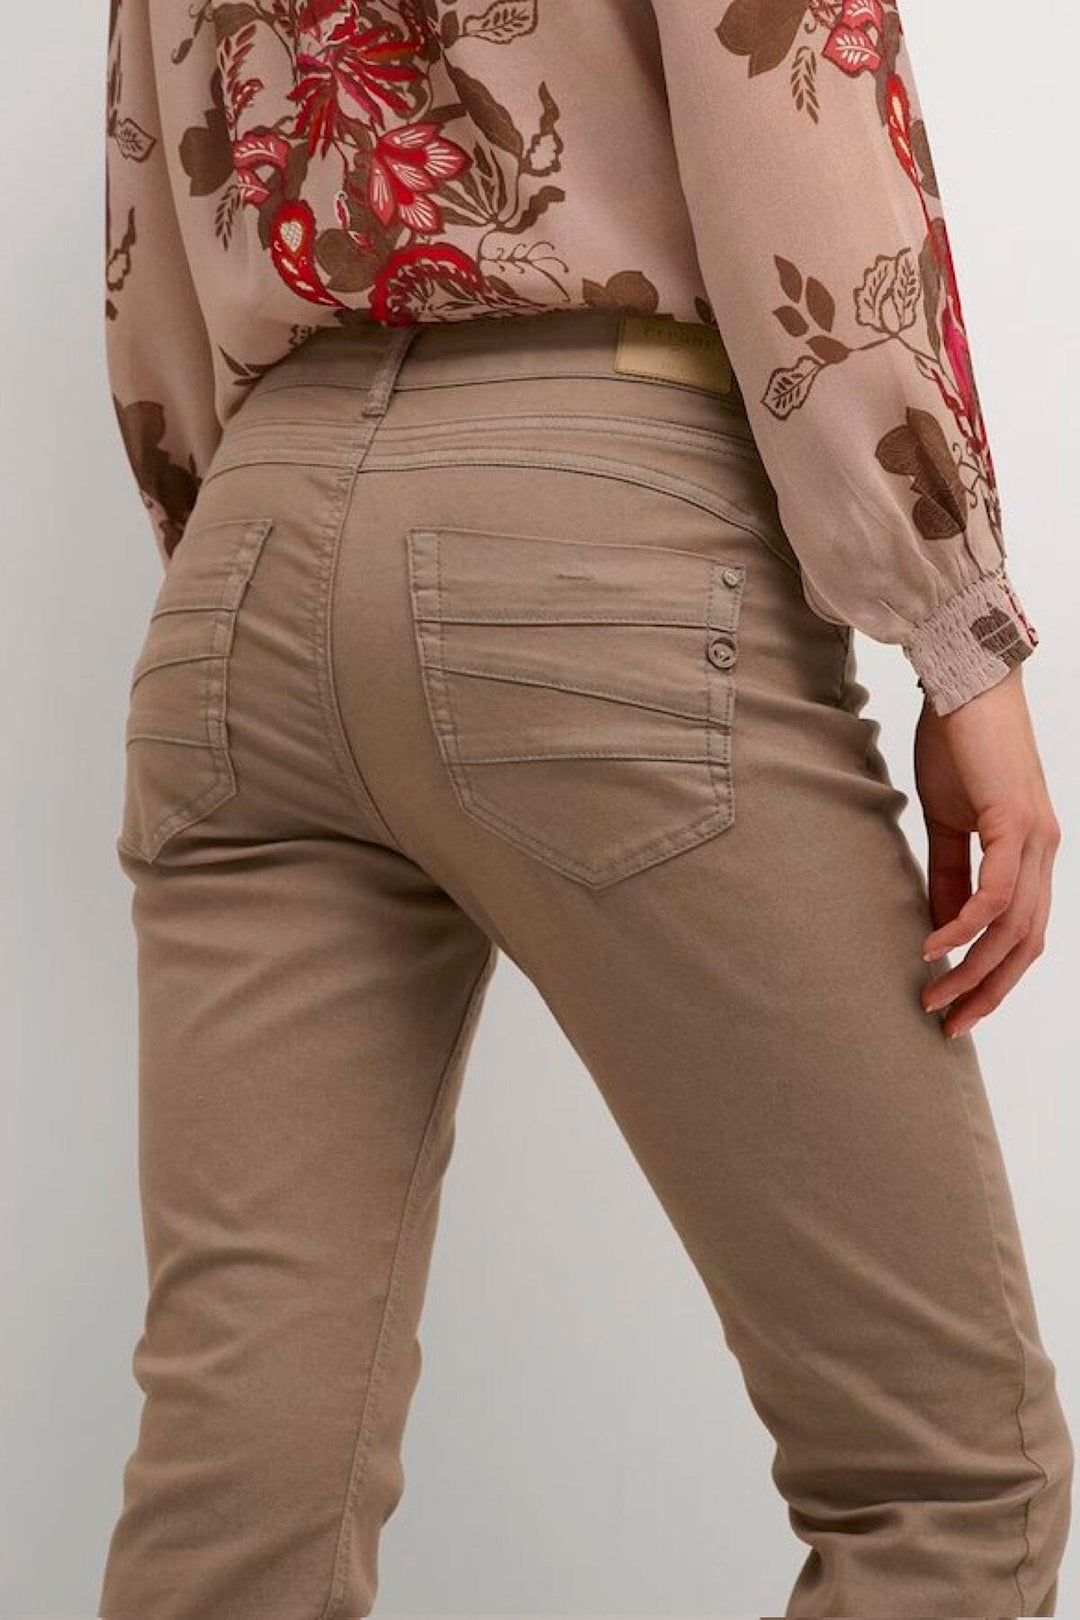 Pantalon style jean étroit Femme - Bas - Pantalon - Jeans Cream